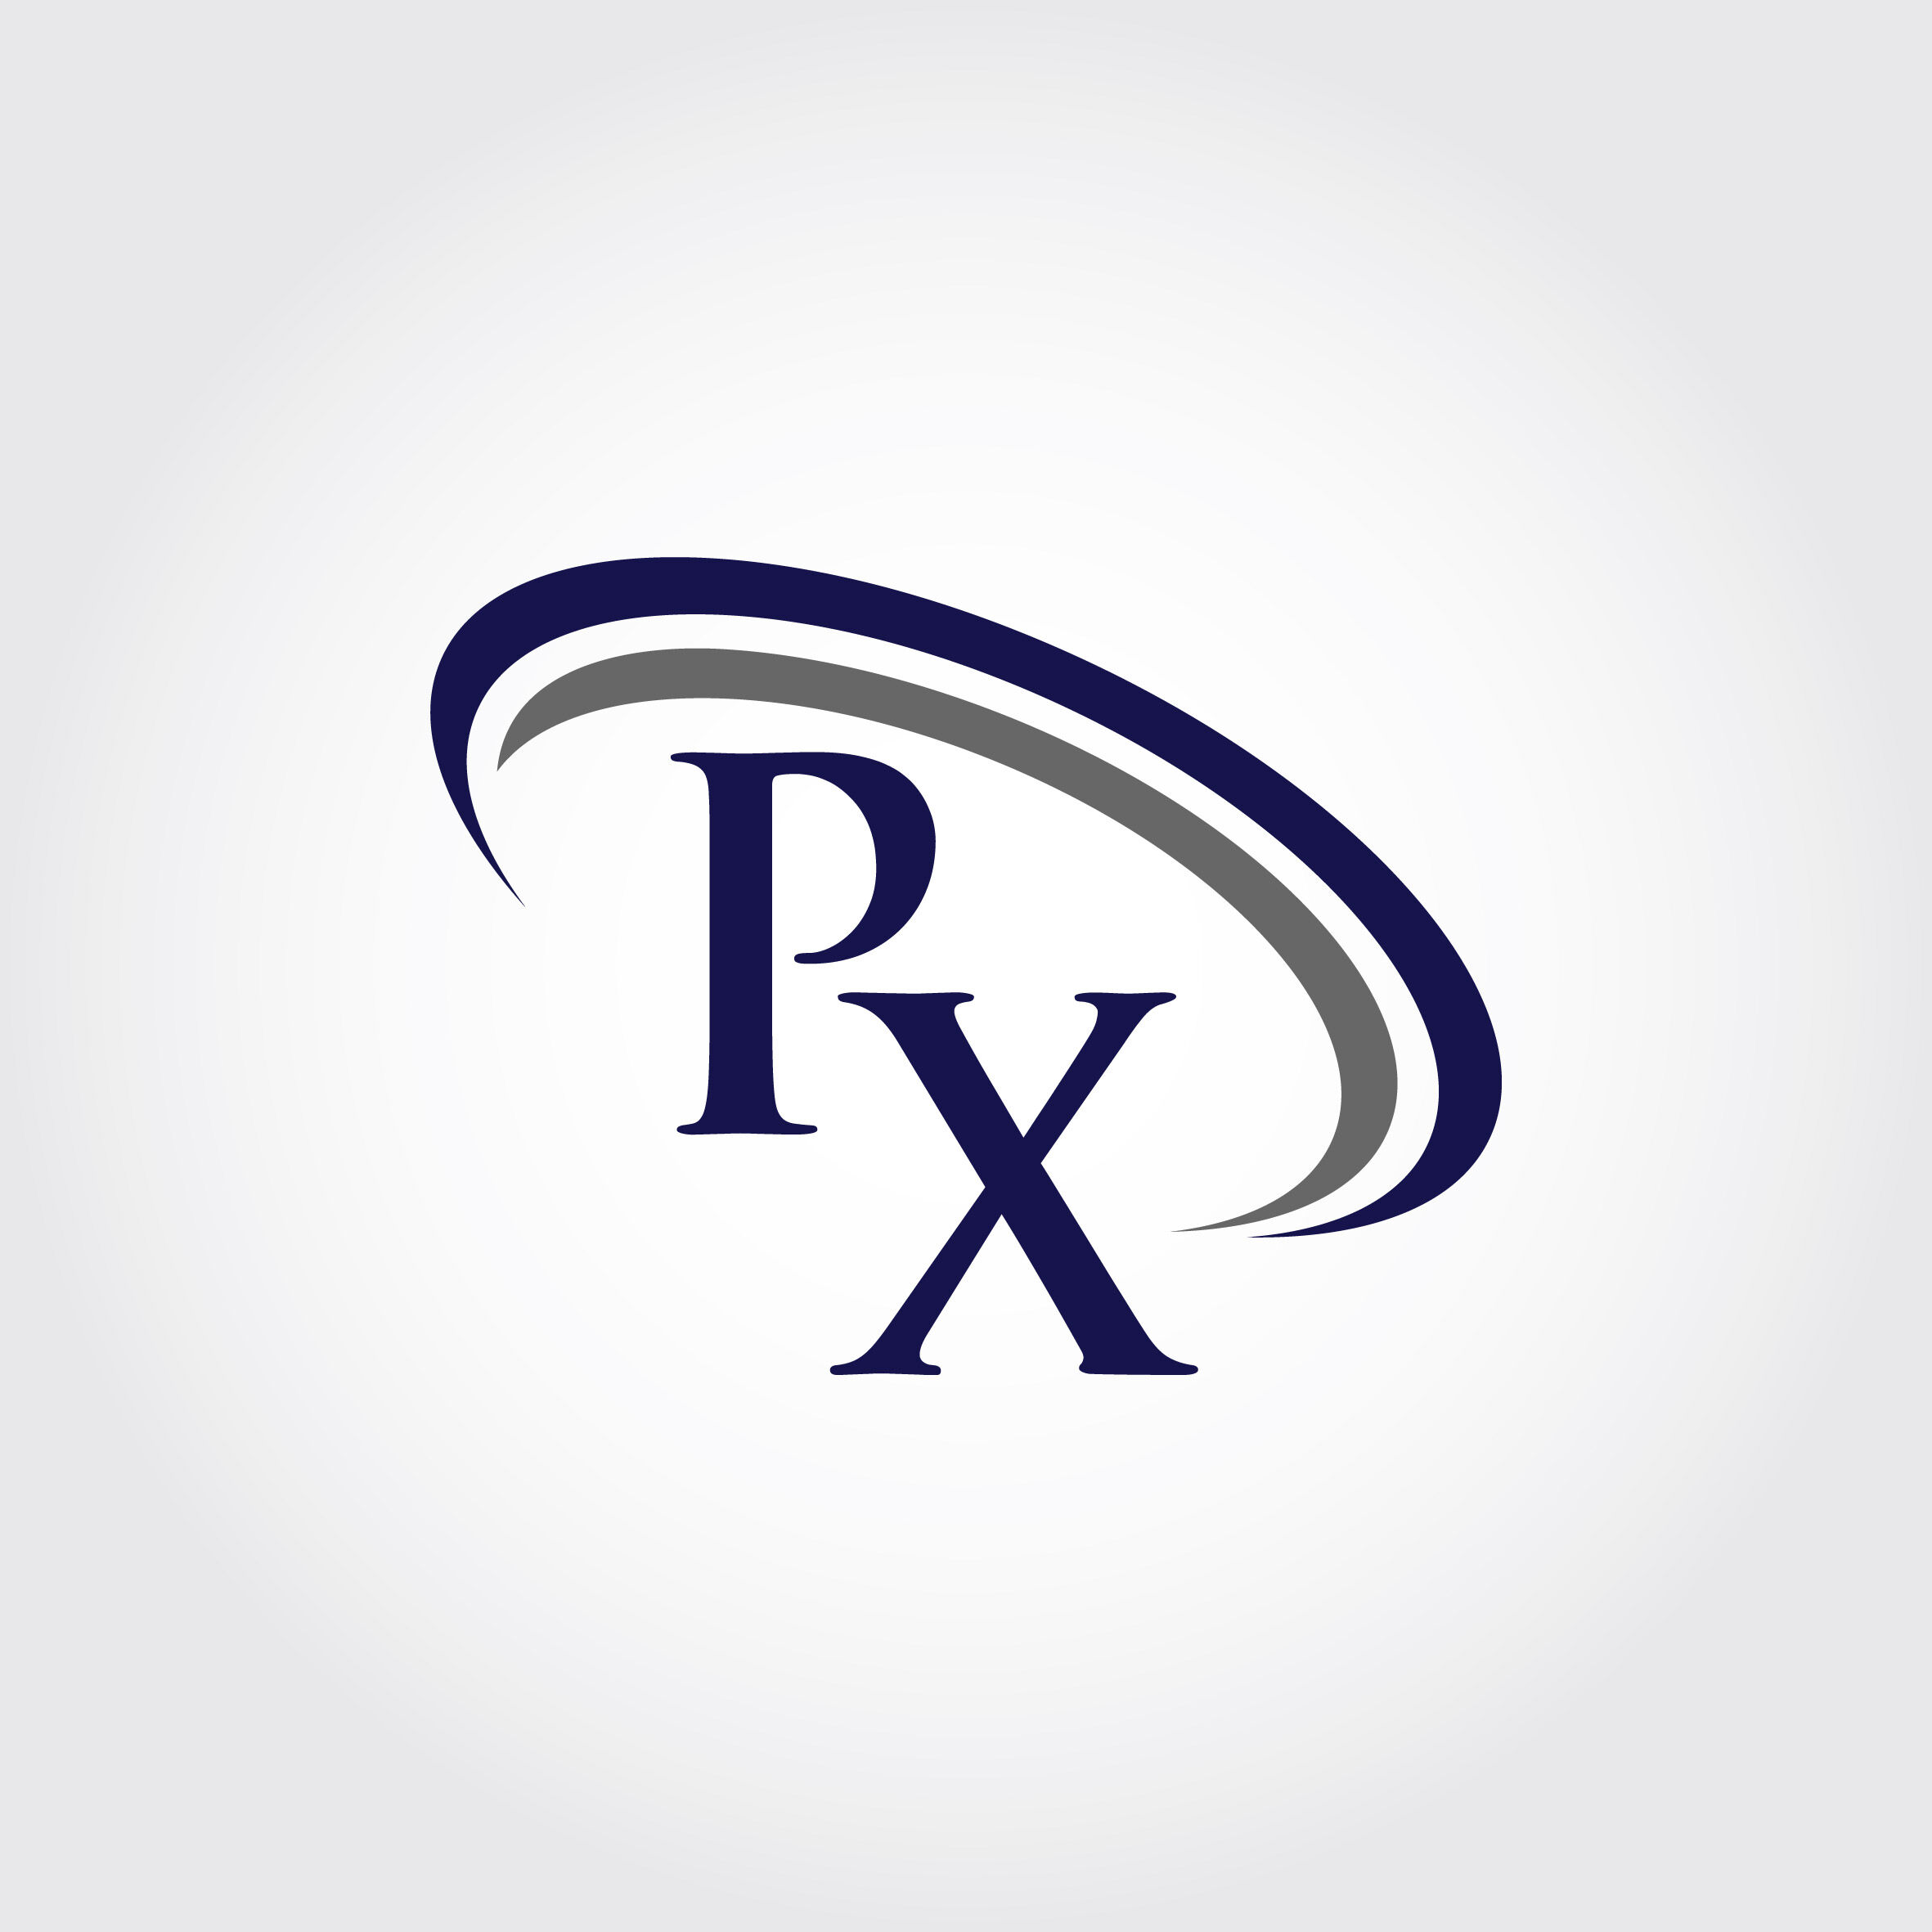 Px logo design Black and White Stock Photos & Images - Alamy